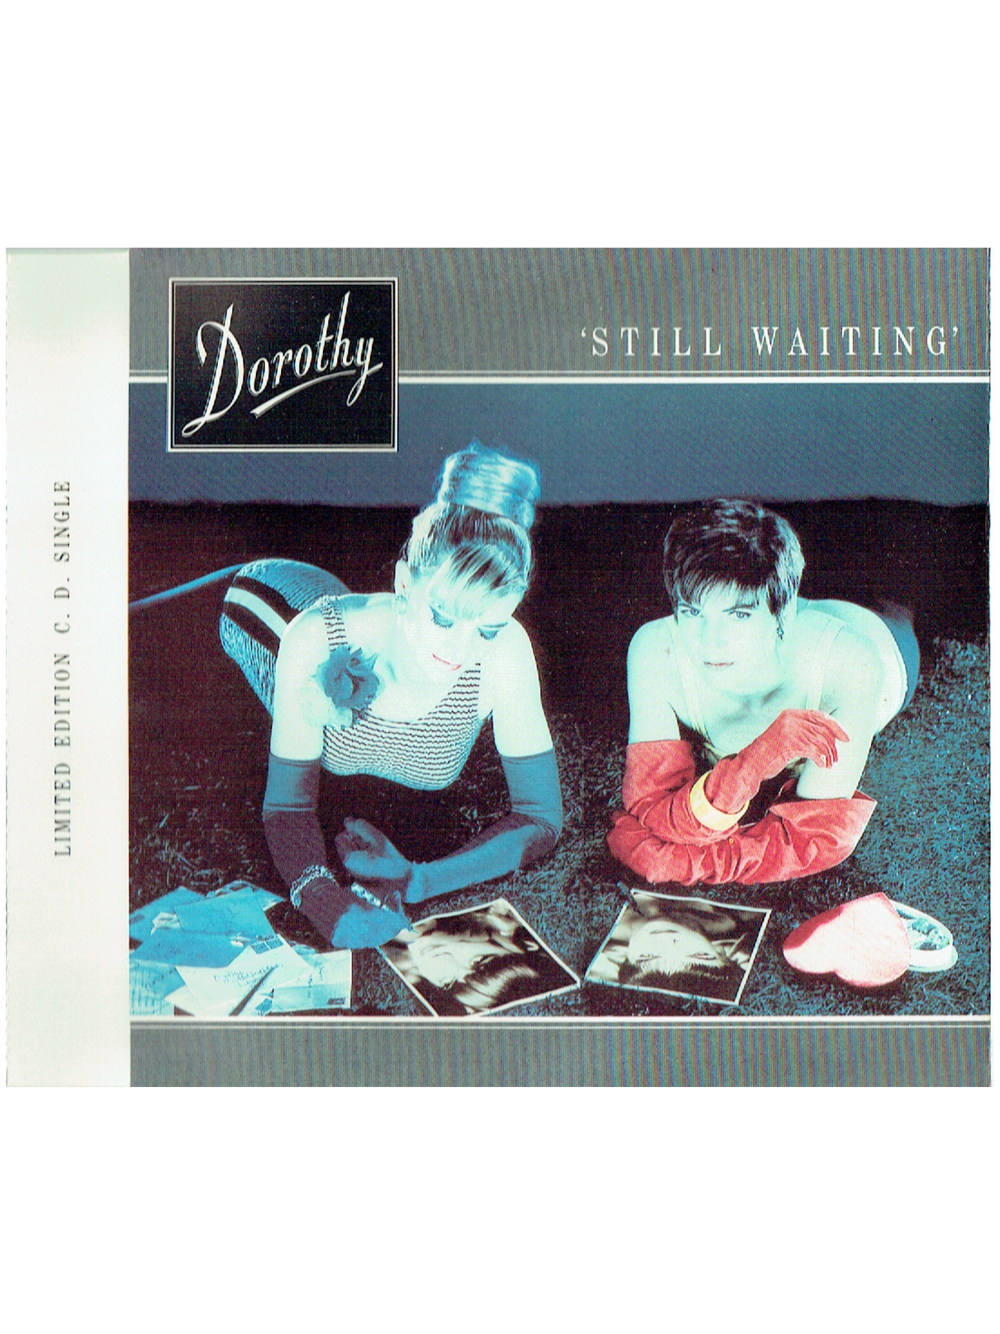 Dorothy Still Waiting EU / UK CD Single 4 Tracks Written By Prince